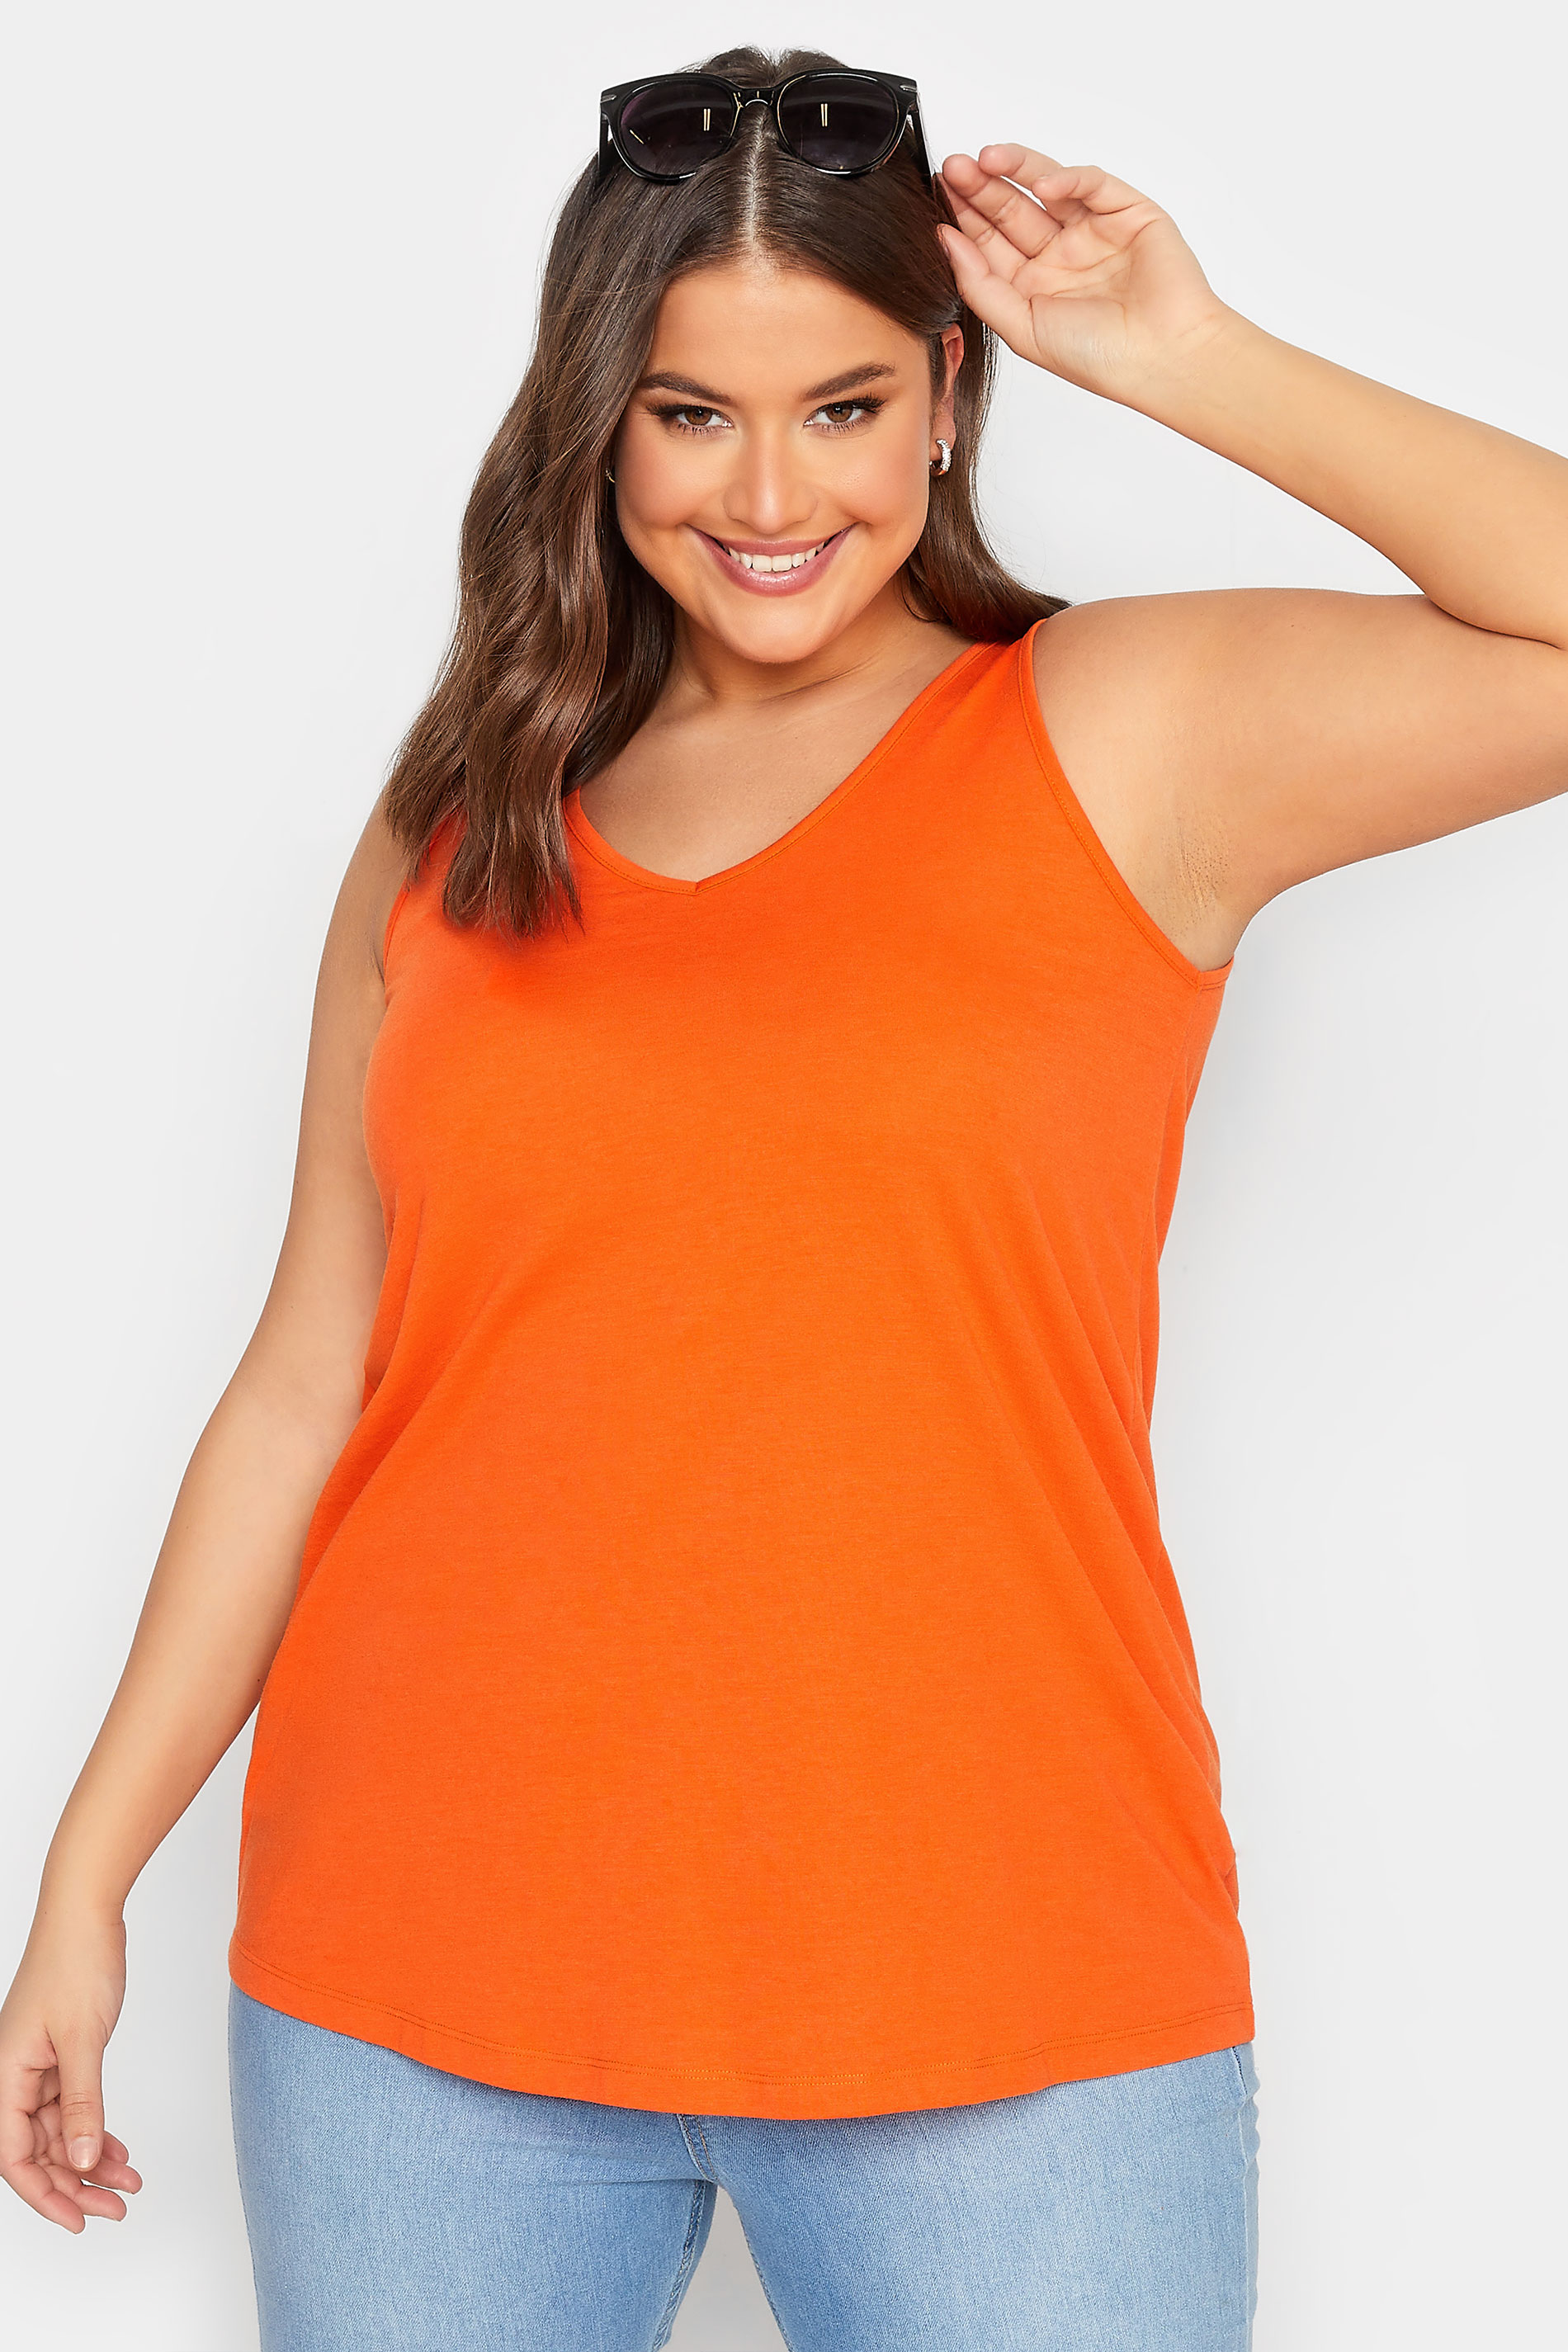 YOURS Plus Size Curve Orange Bar Back Vest Top | Yours Clothing  1